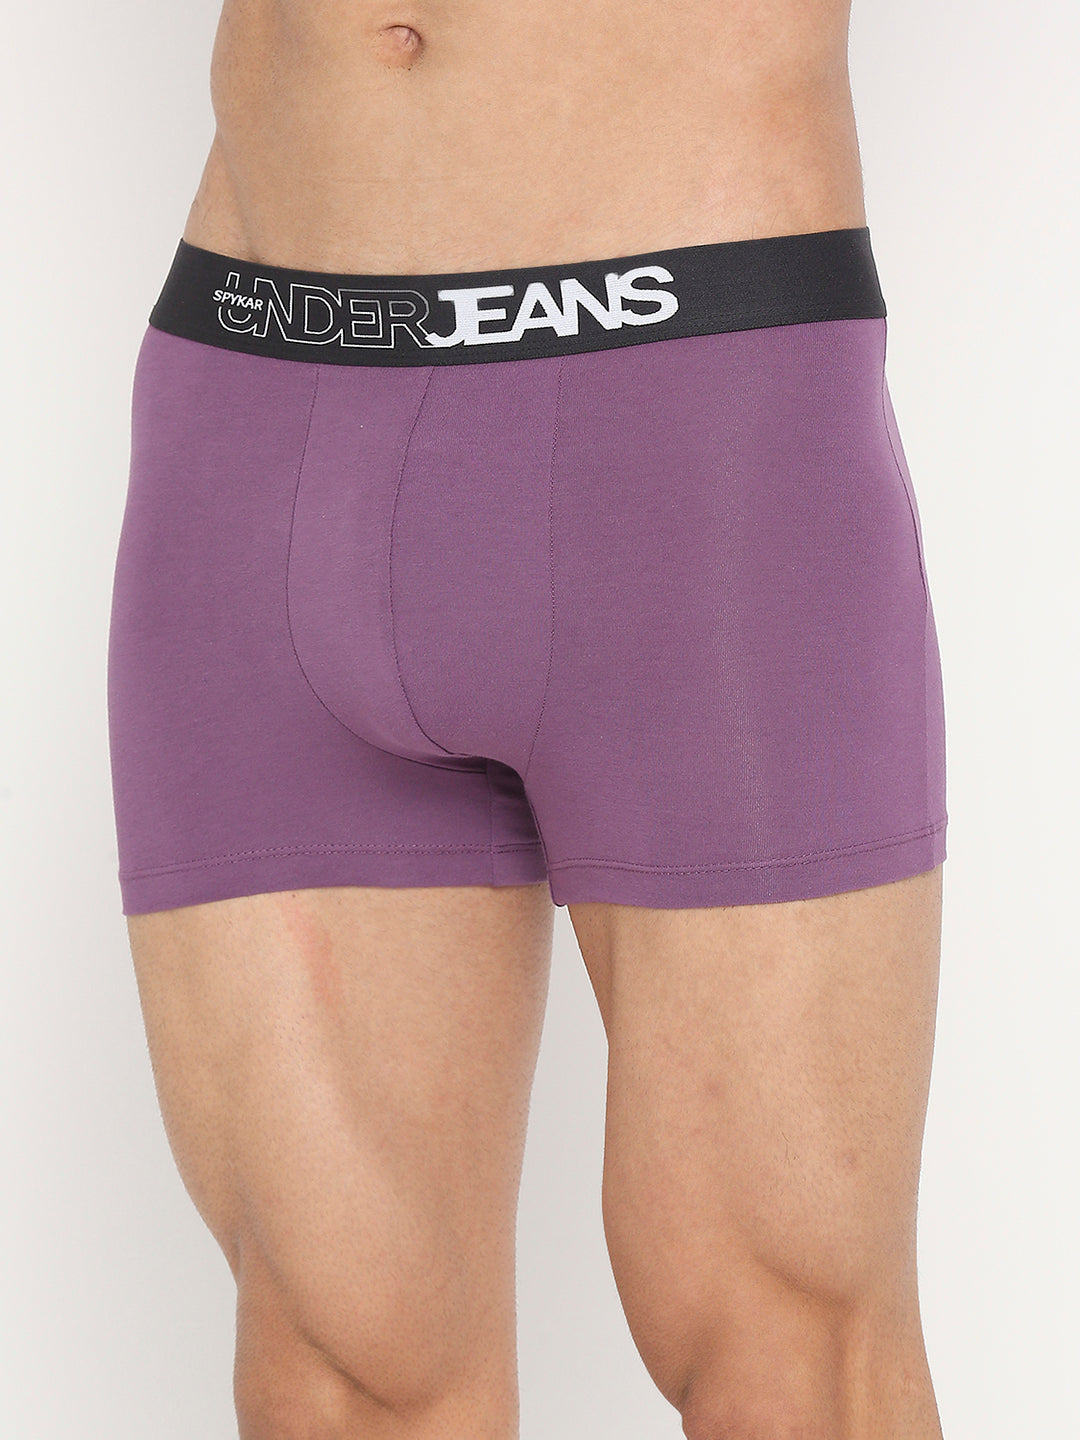 Underjeans by Spykar Men Premium Dull Purple Cotton Blend Brief -  ujnpbs021dullpurple